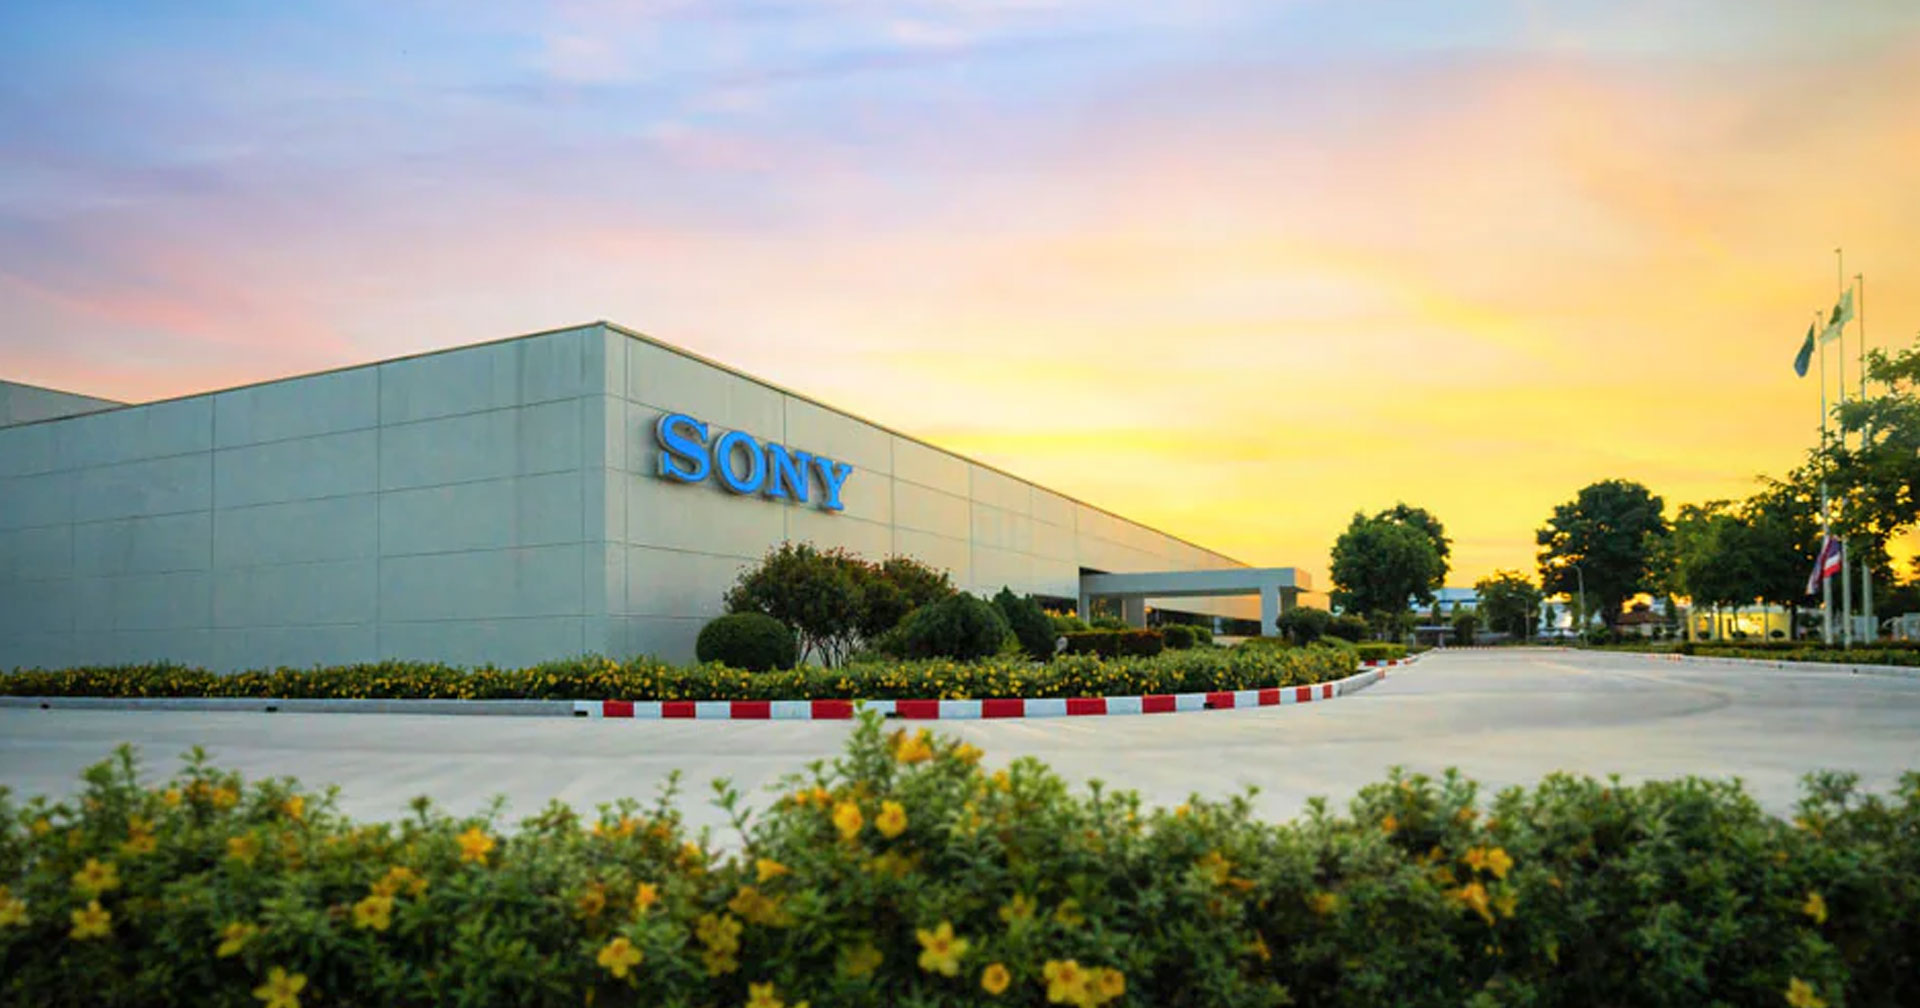 Sony รักโลก วางแผนใช้พลังงานหมุนเวียน 100% สำหรับโรงงาน Image Sensor ในประเทศไทย